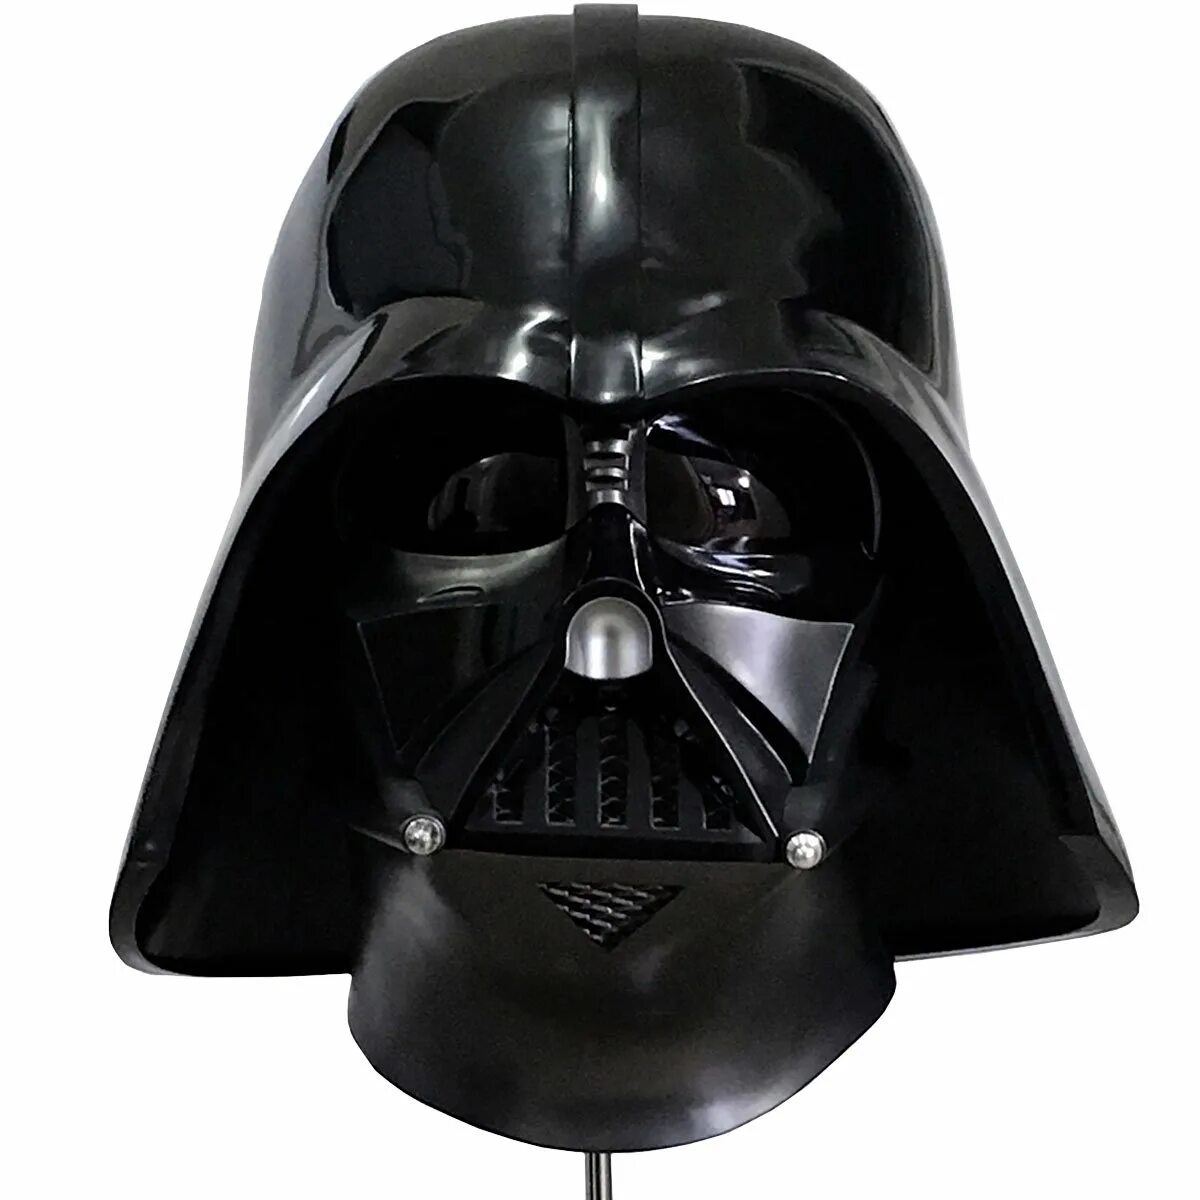 Шлем Star Wars Дарта Вейдера. Darth Vader шлем. Звёздные войны Дарт Вейдер без маски. Дарт Вейдер голова. Маска звездные войны дарт вейдер